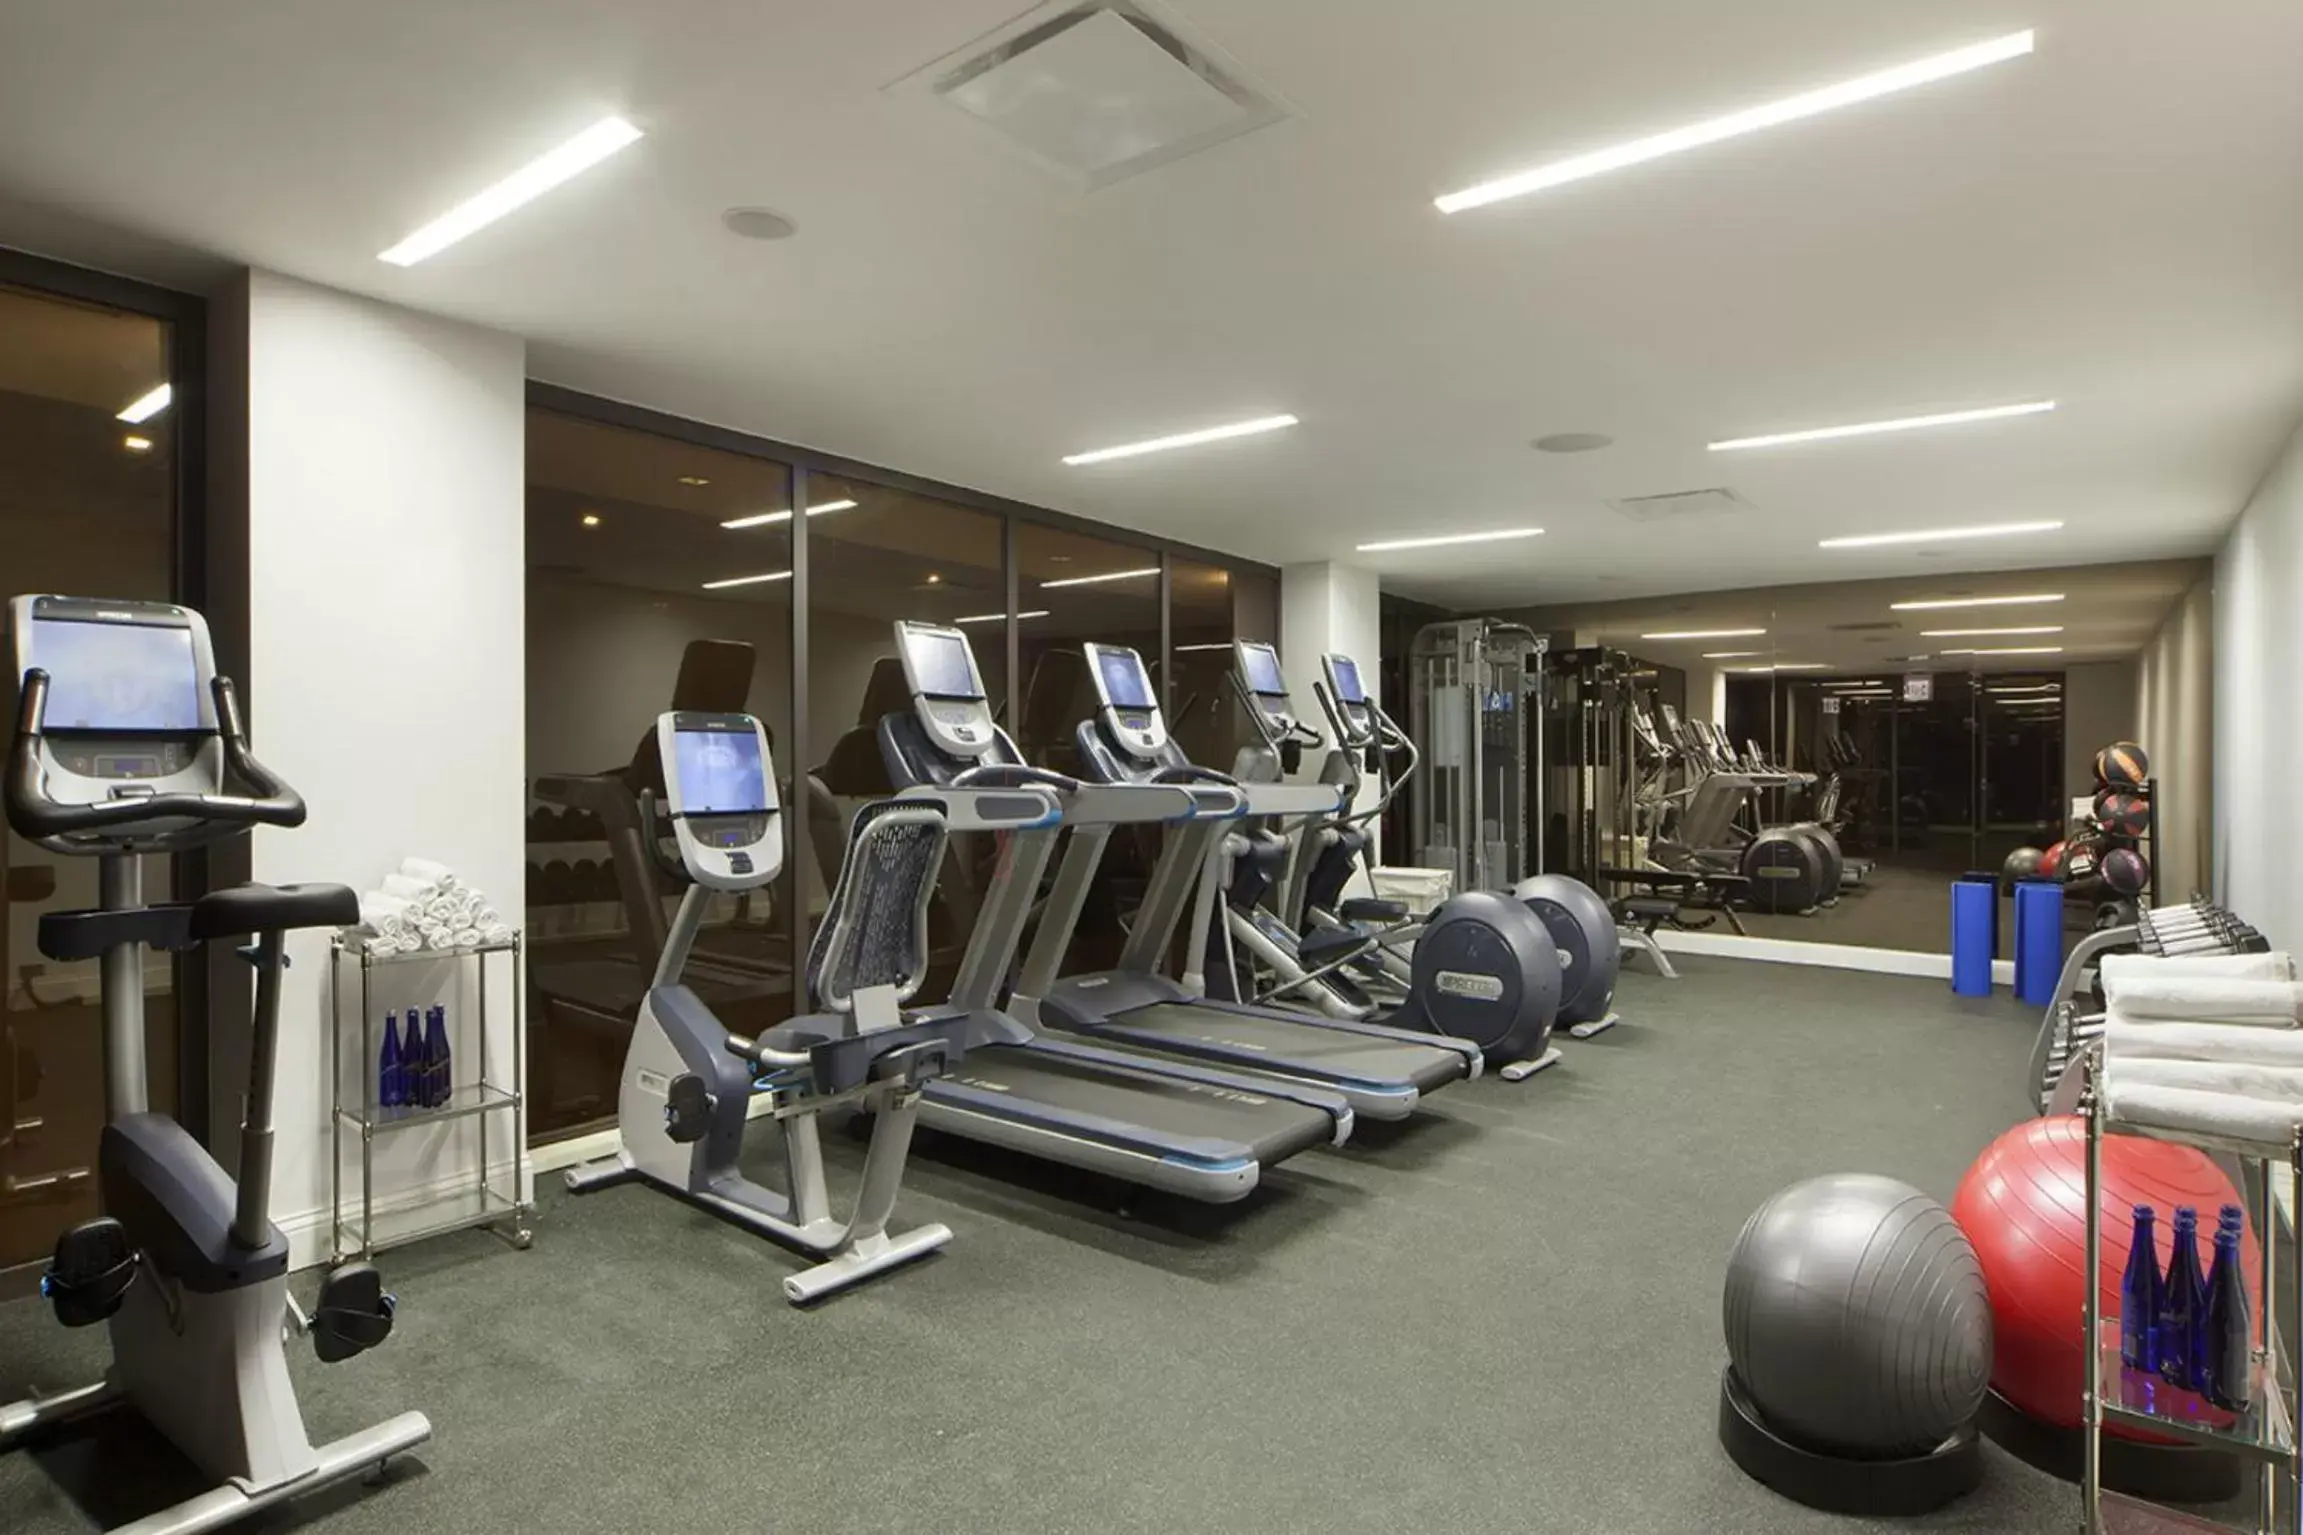 Fitness centre/facilities, Fitness Center/Facilities in The Marmara Park Avenue